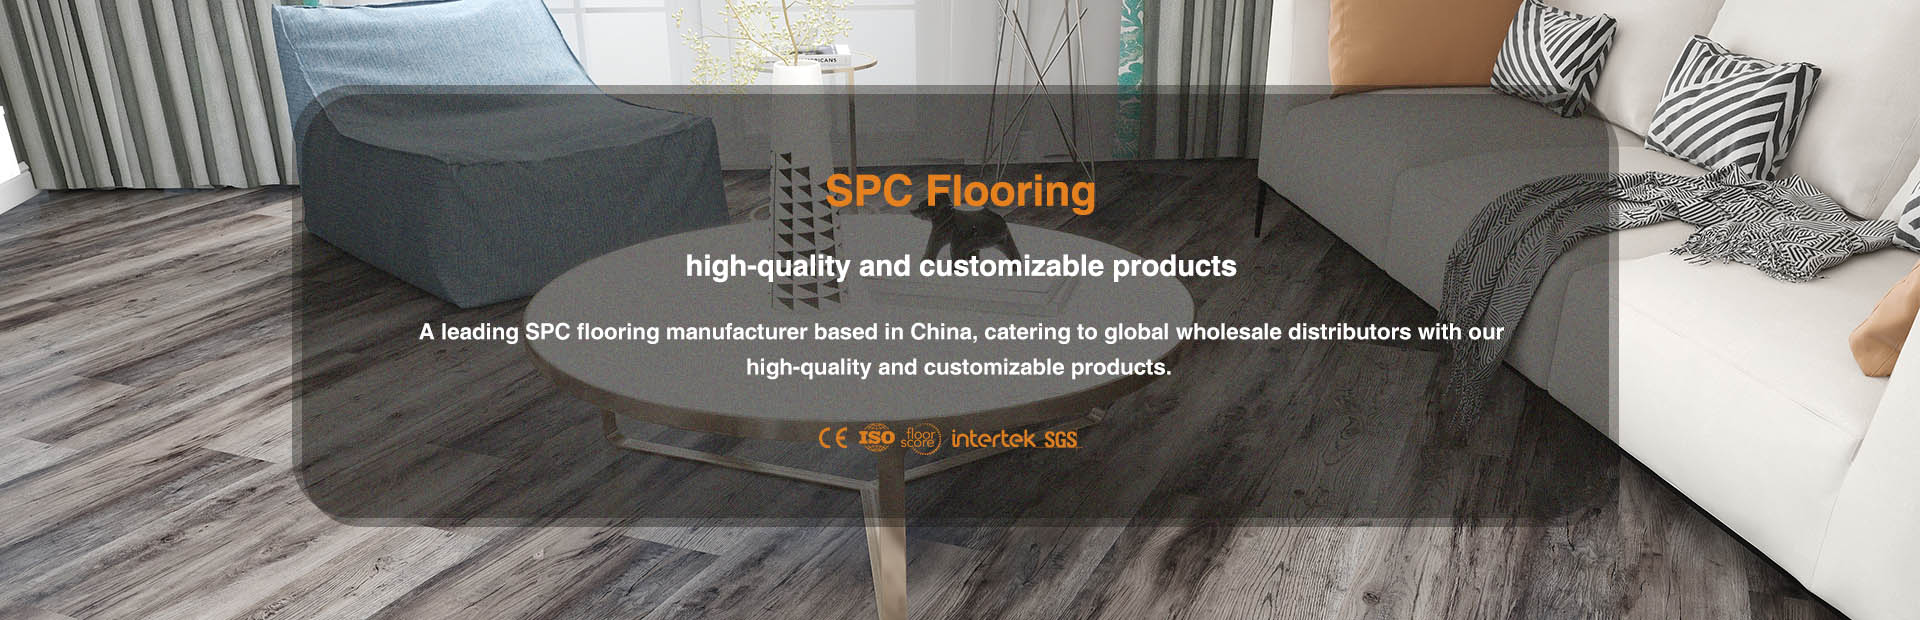 spc flooring supplier in china